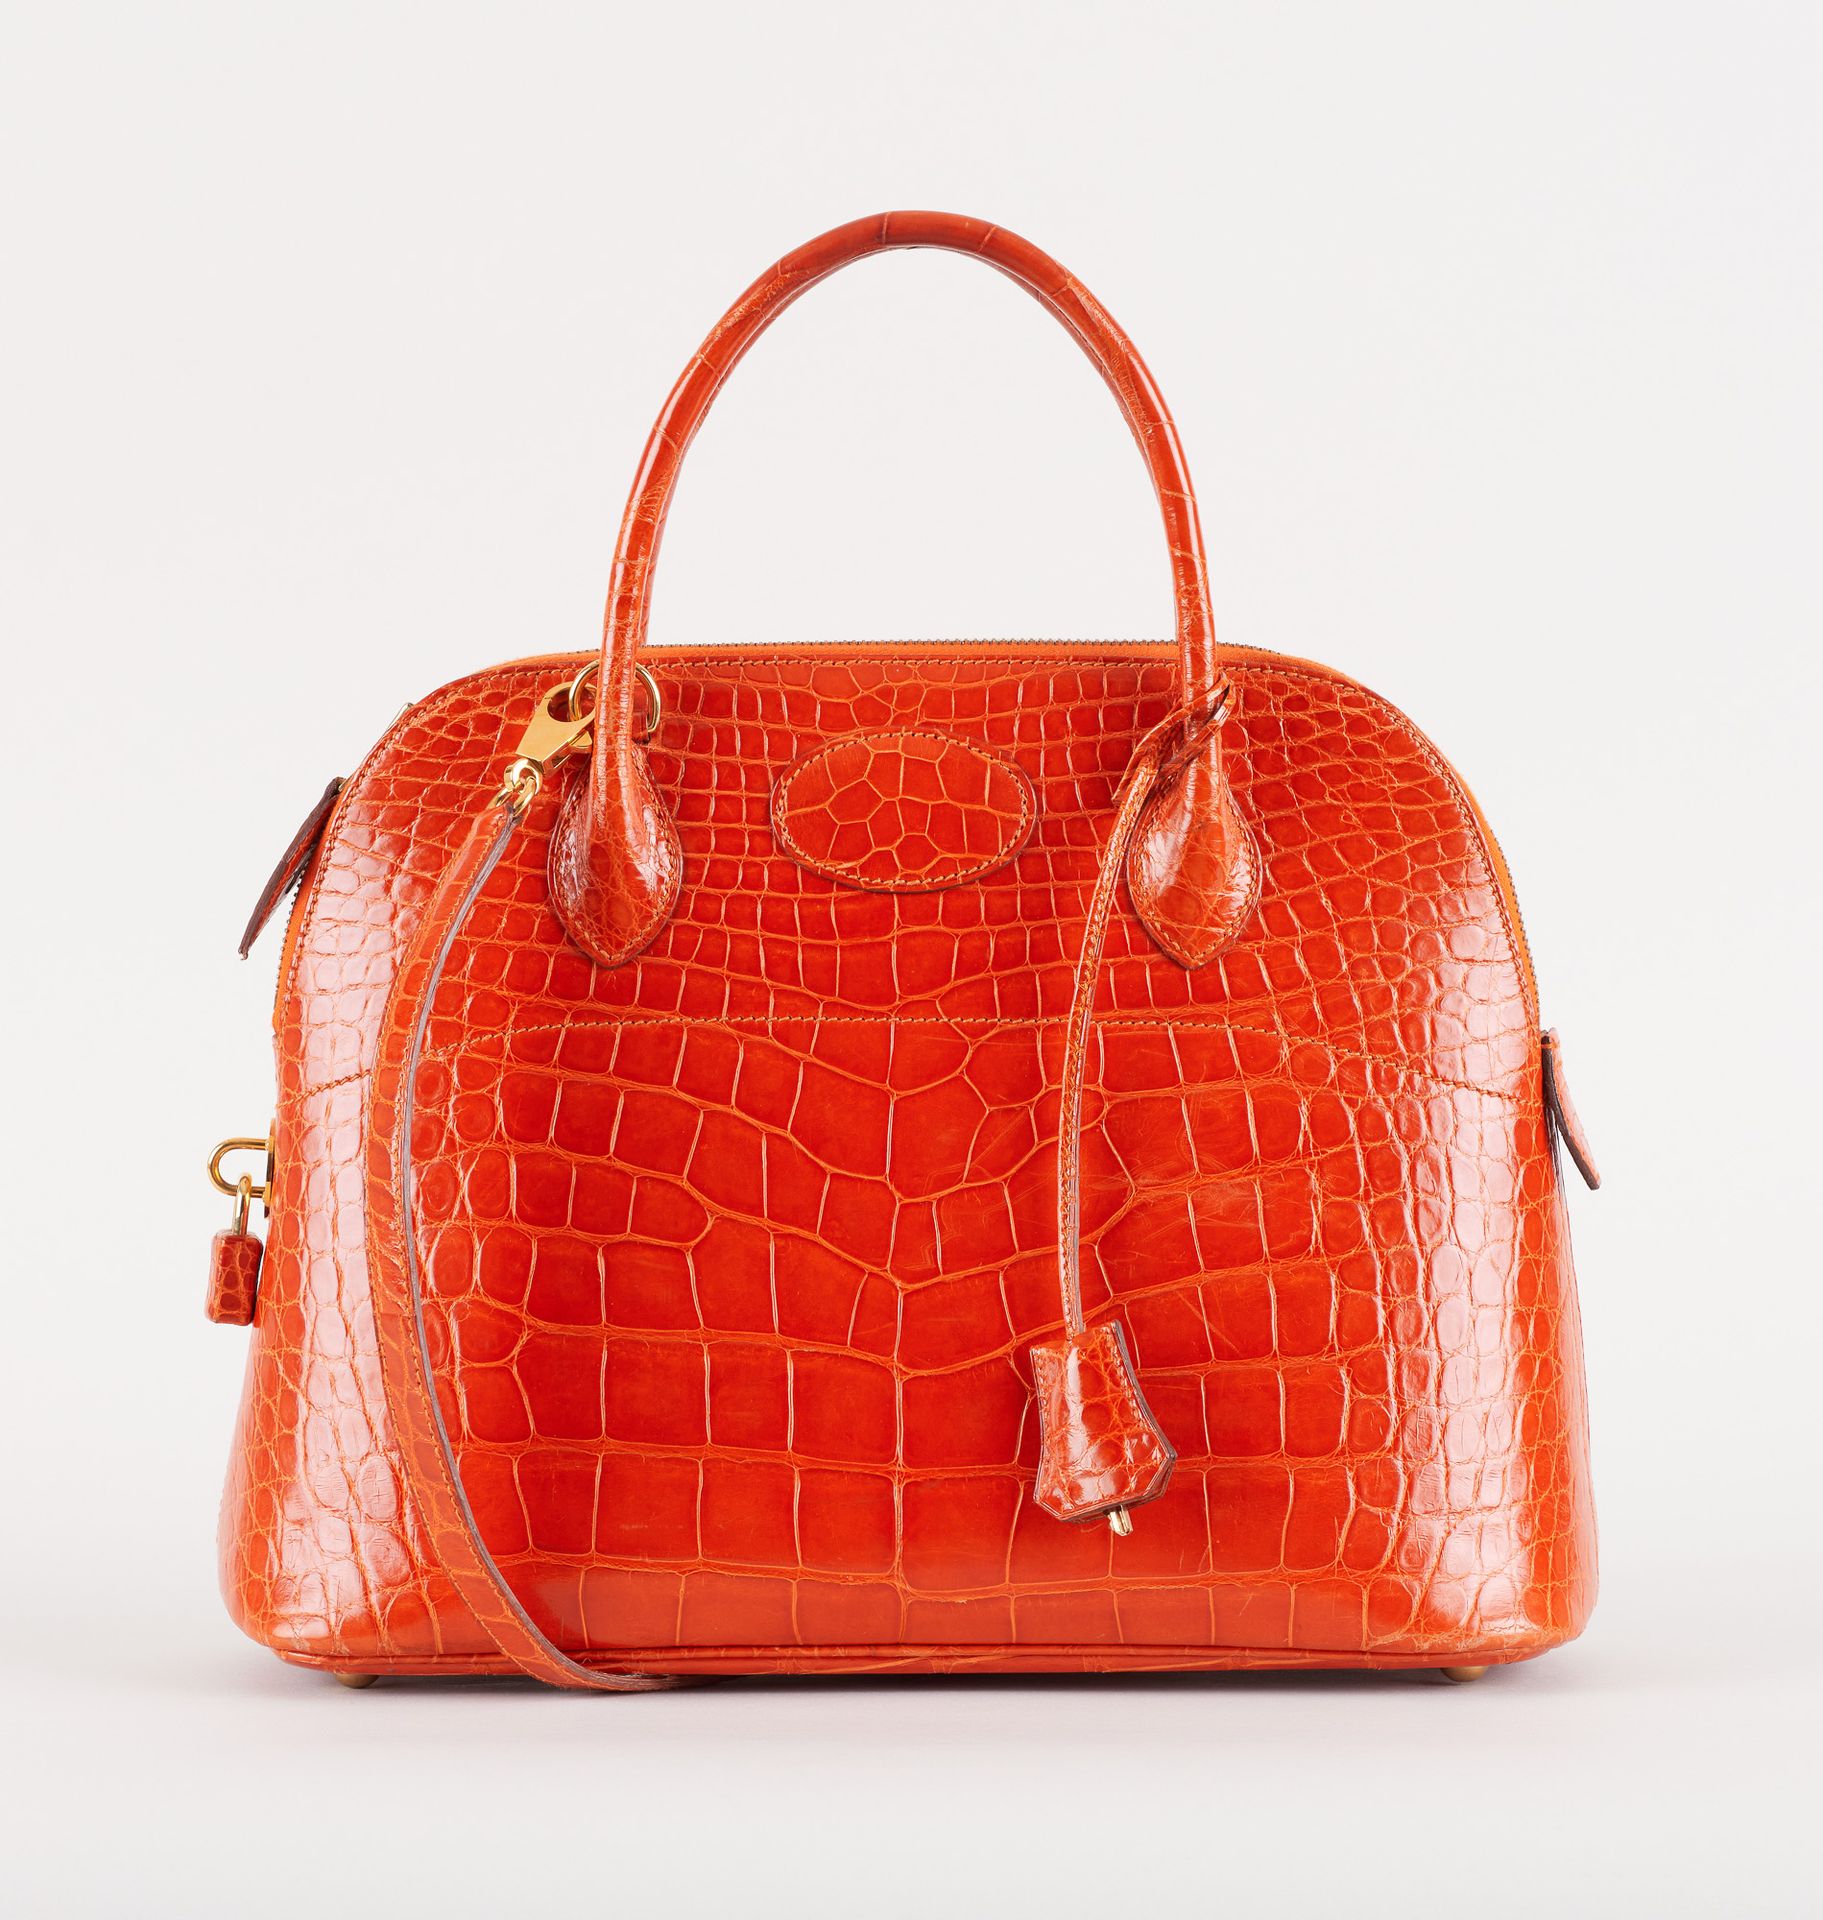 HERMES. 
Leather goods: Handbag in orange alligator skin, in its protective cove&hellip;